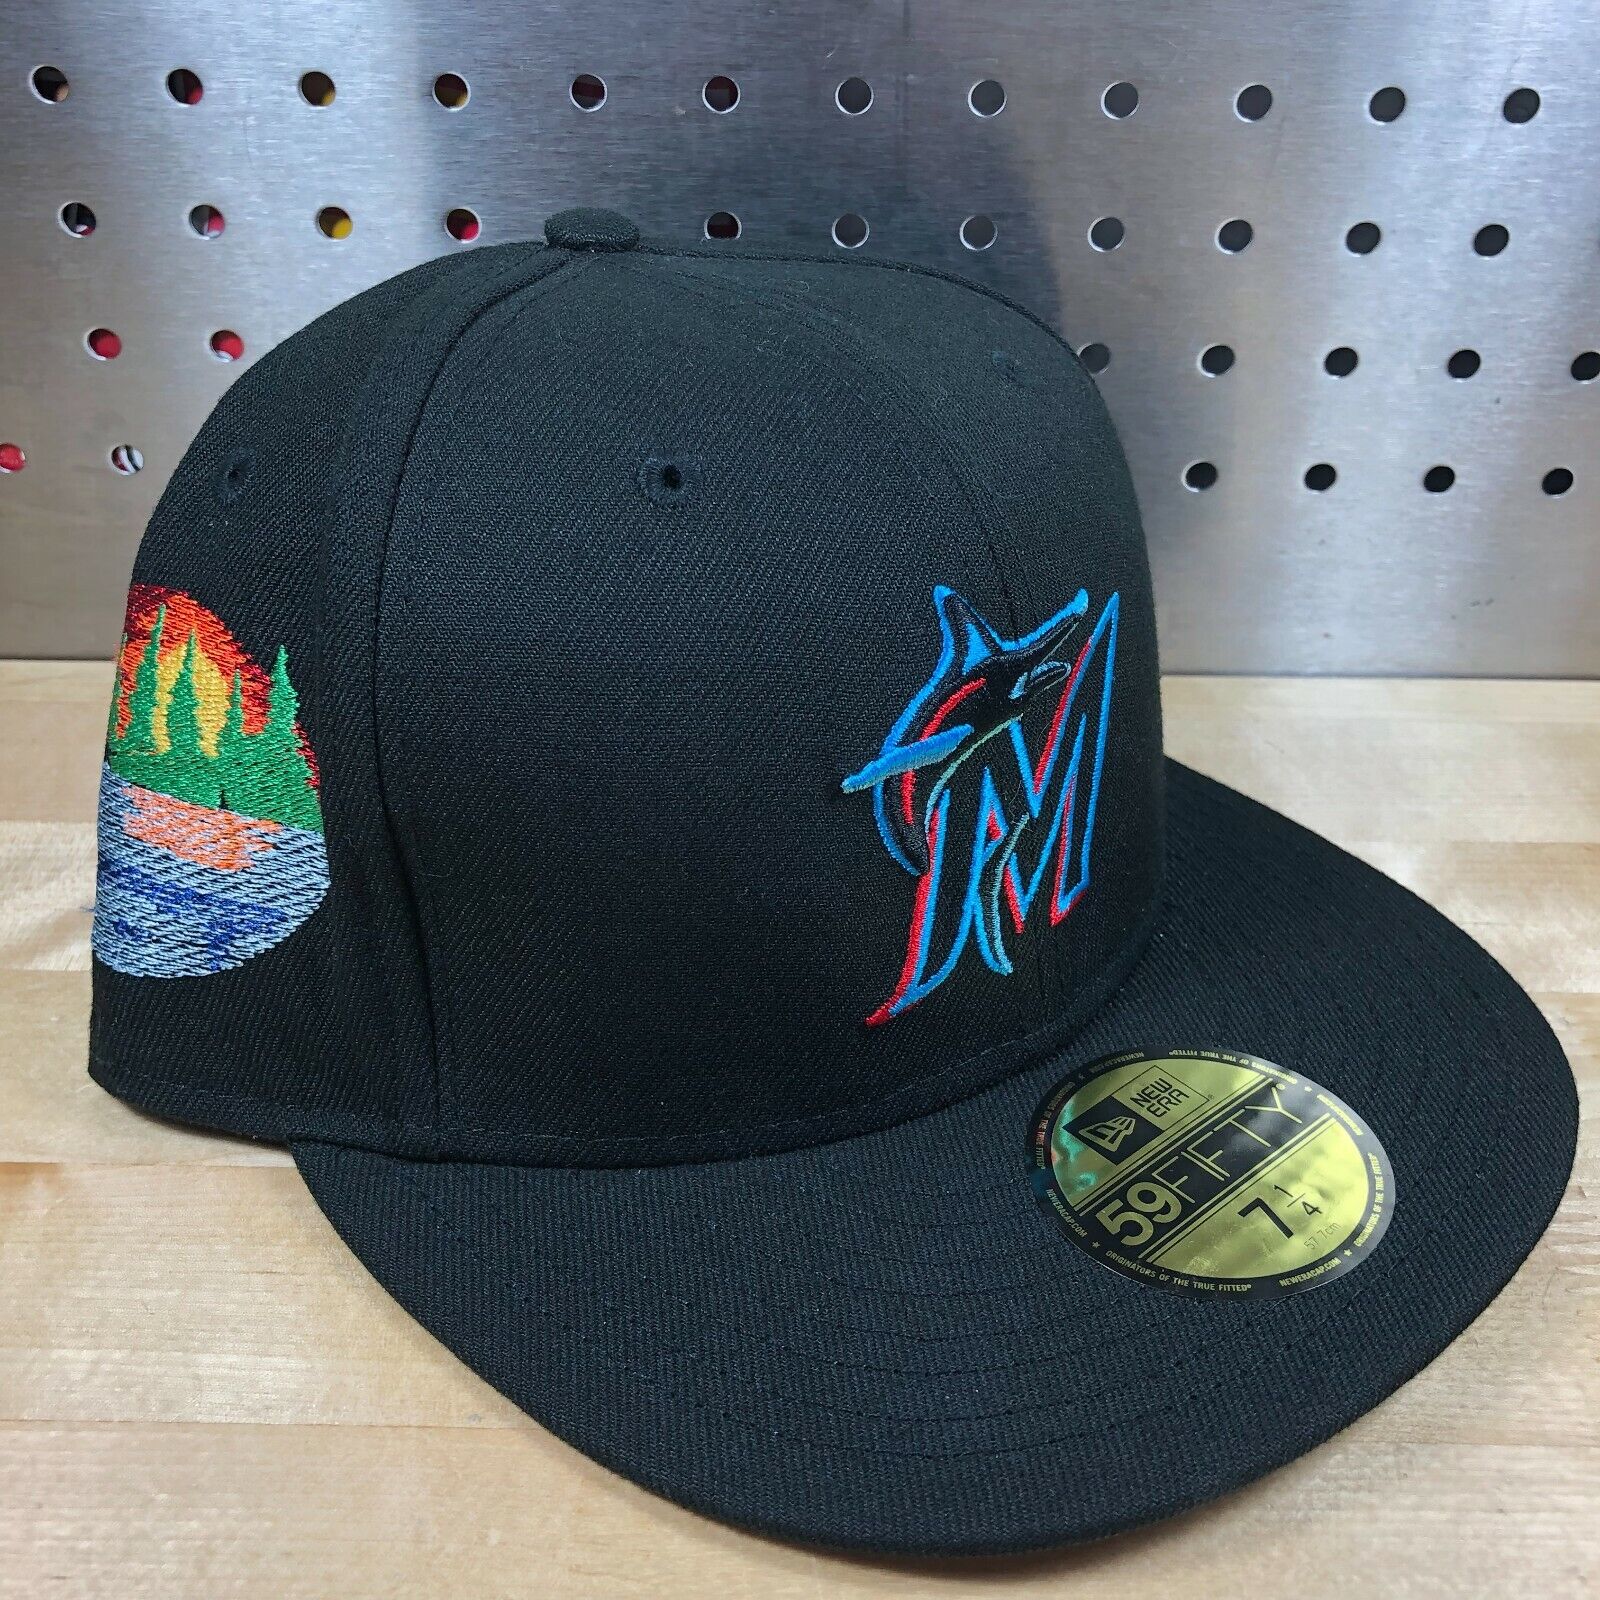 New Era 59Fifty Hat MLB Miami Marlins Black CUSTOM SCENERY Fitted Cap 5950 7 1/4